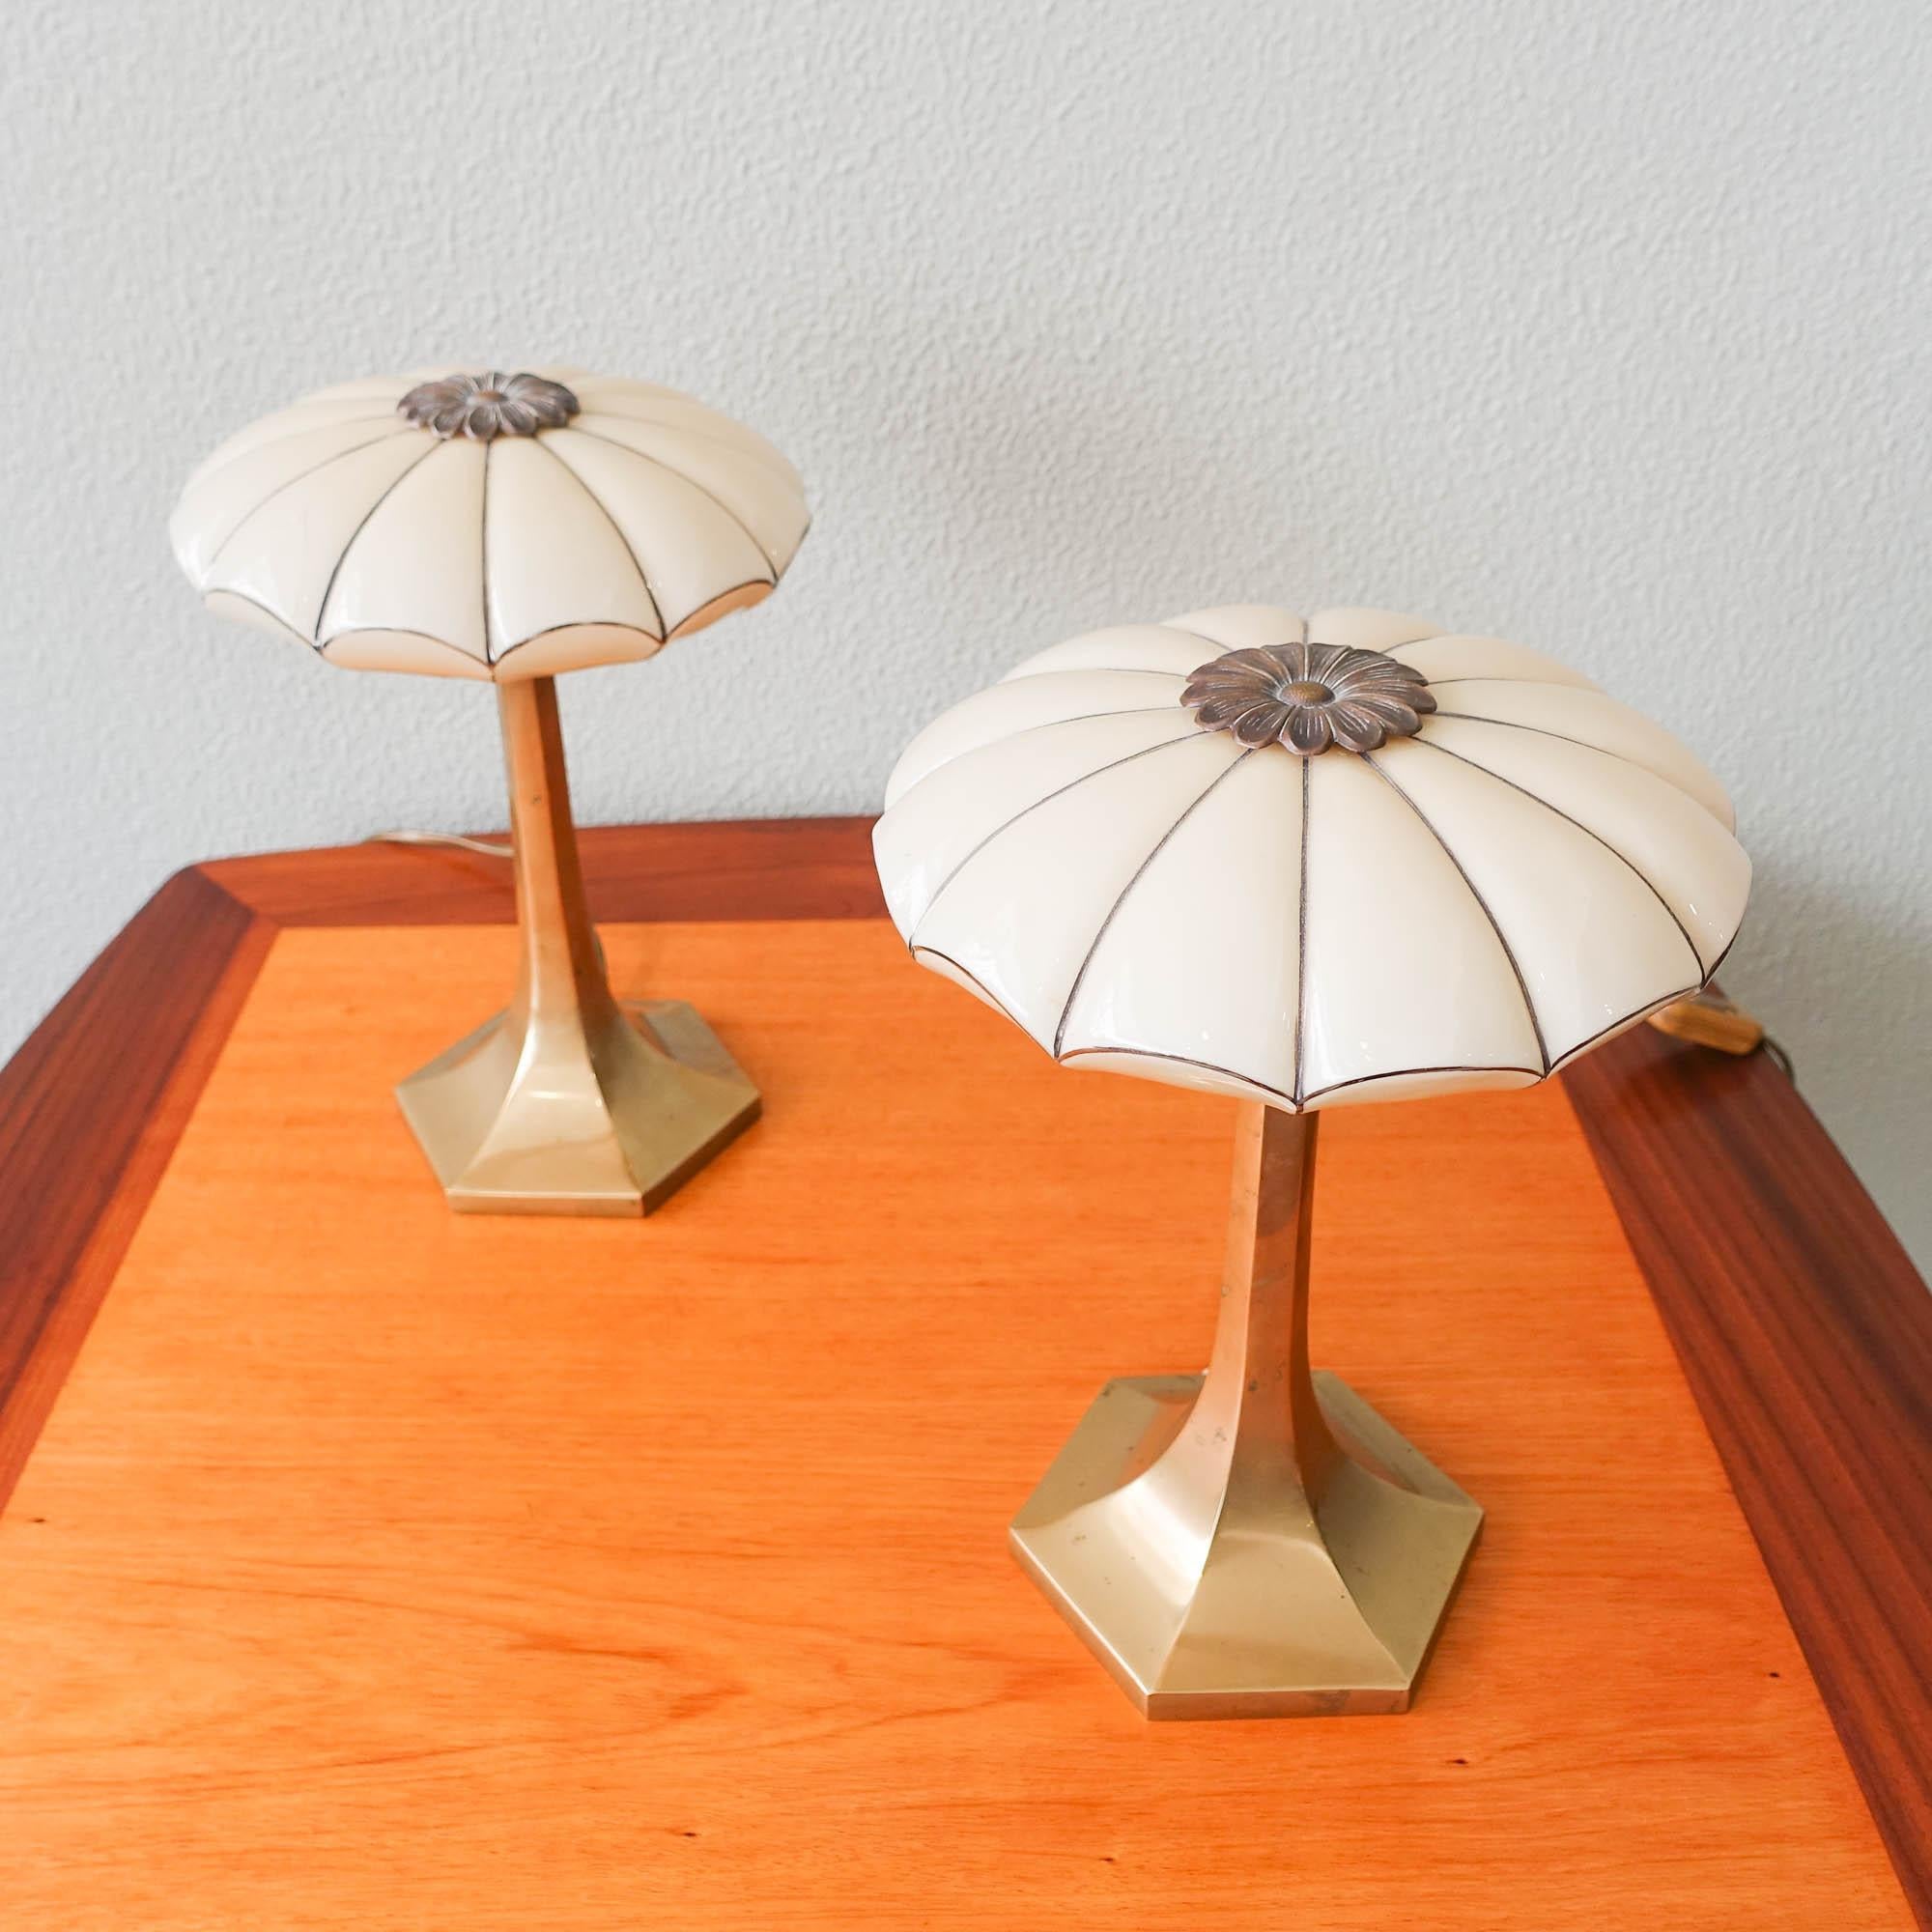 Pair of Art Deco Table Lamps from Josef Hoffman for Wiener Werkstatte, 1930's 2